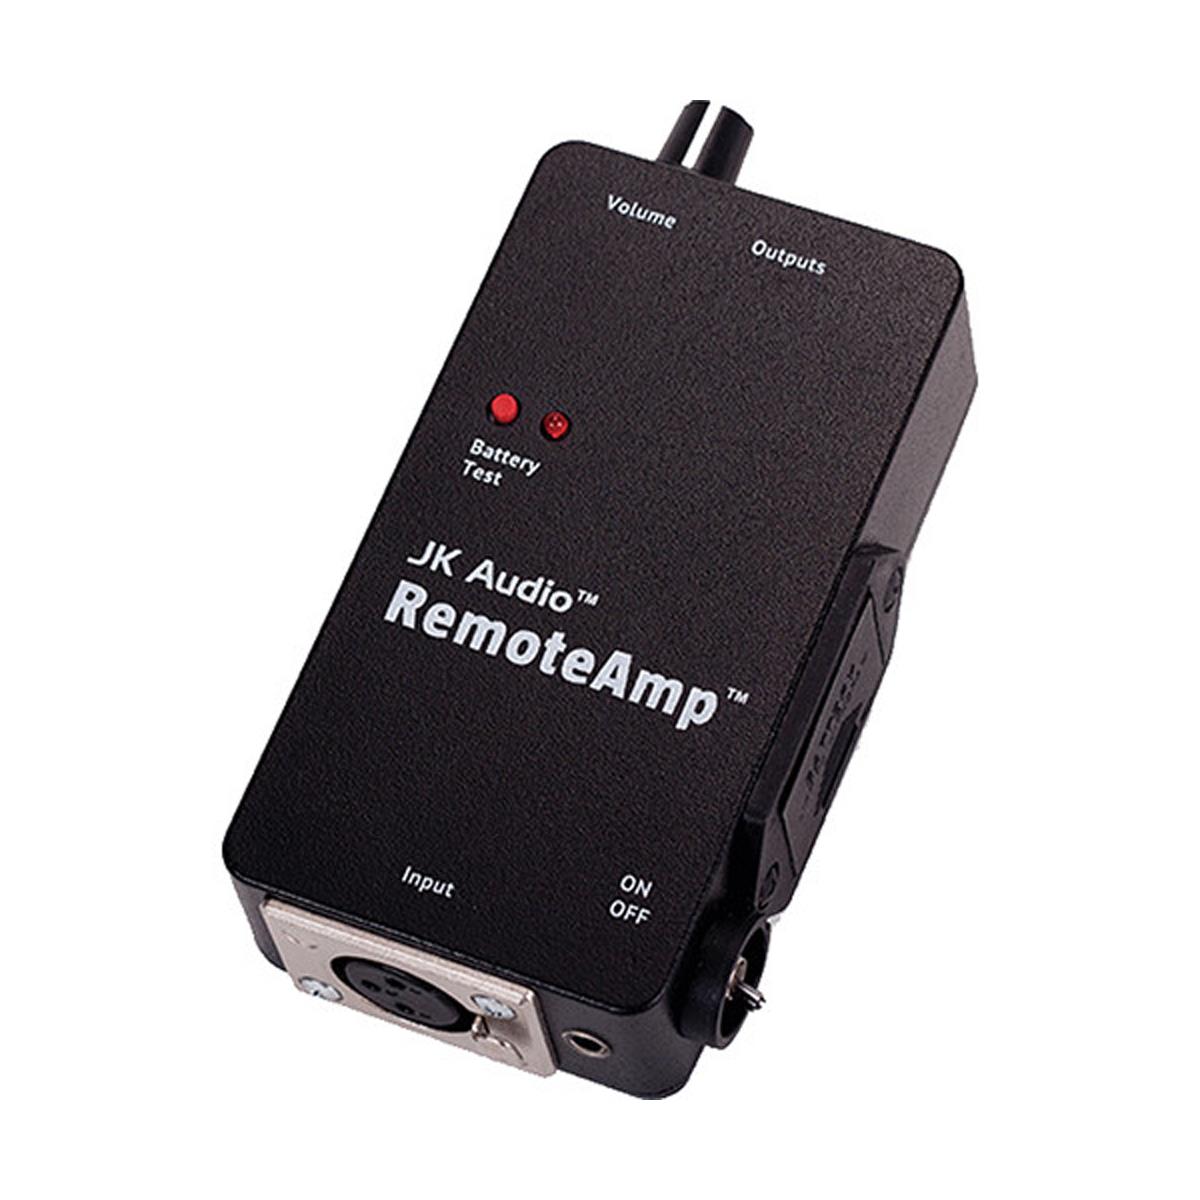 Image of JK Audio RemoteAmp Personal Battery Powered Headphone/Earpiece Amplifier